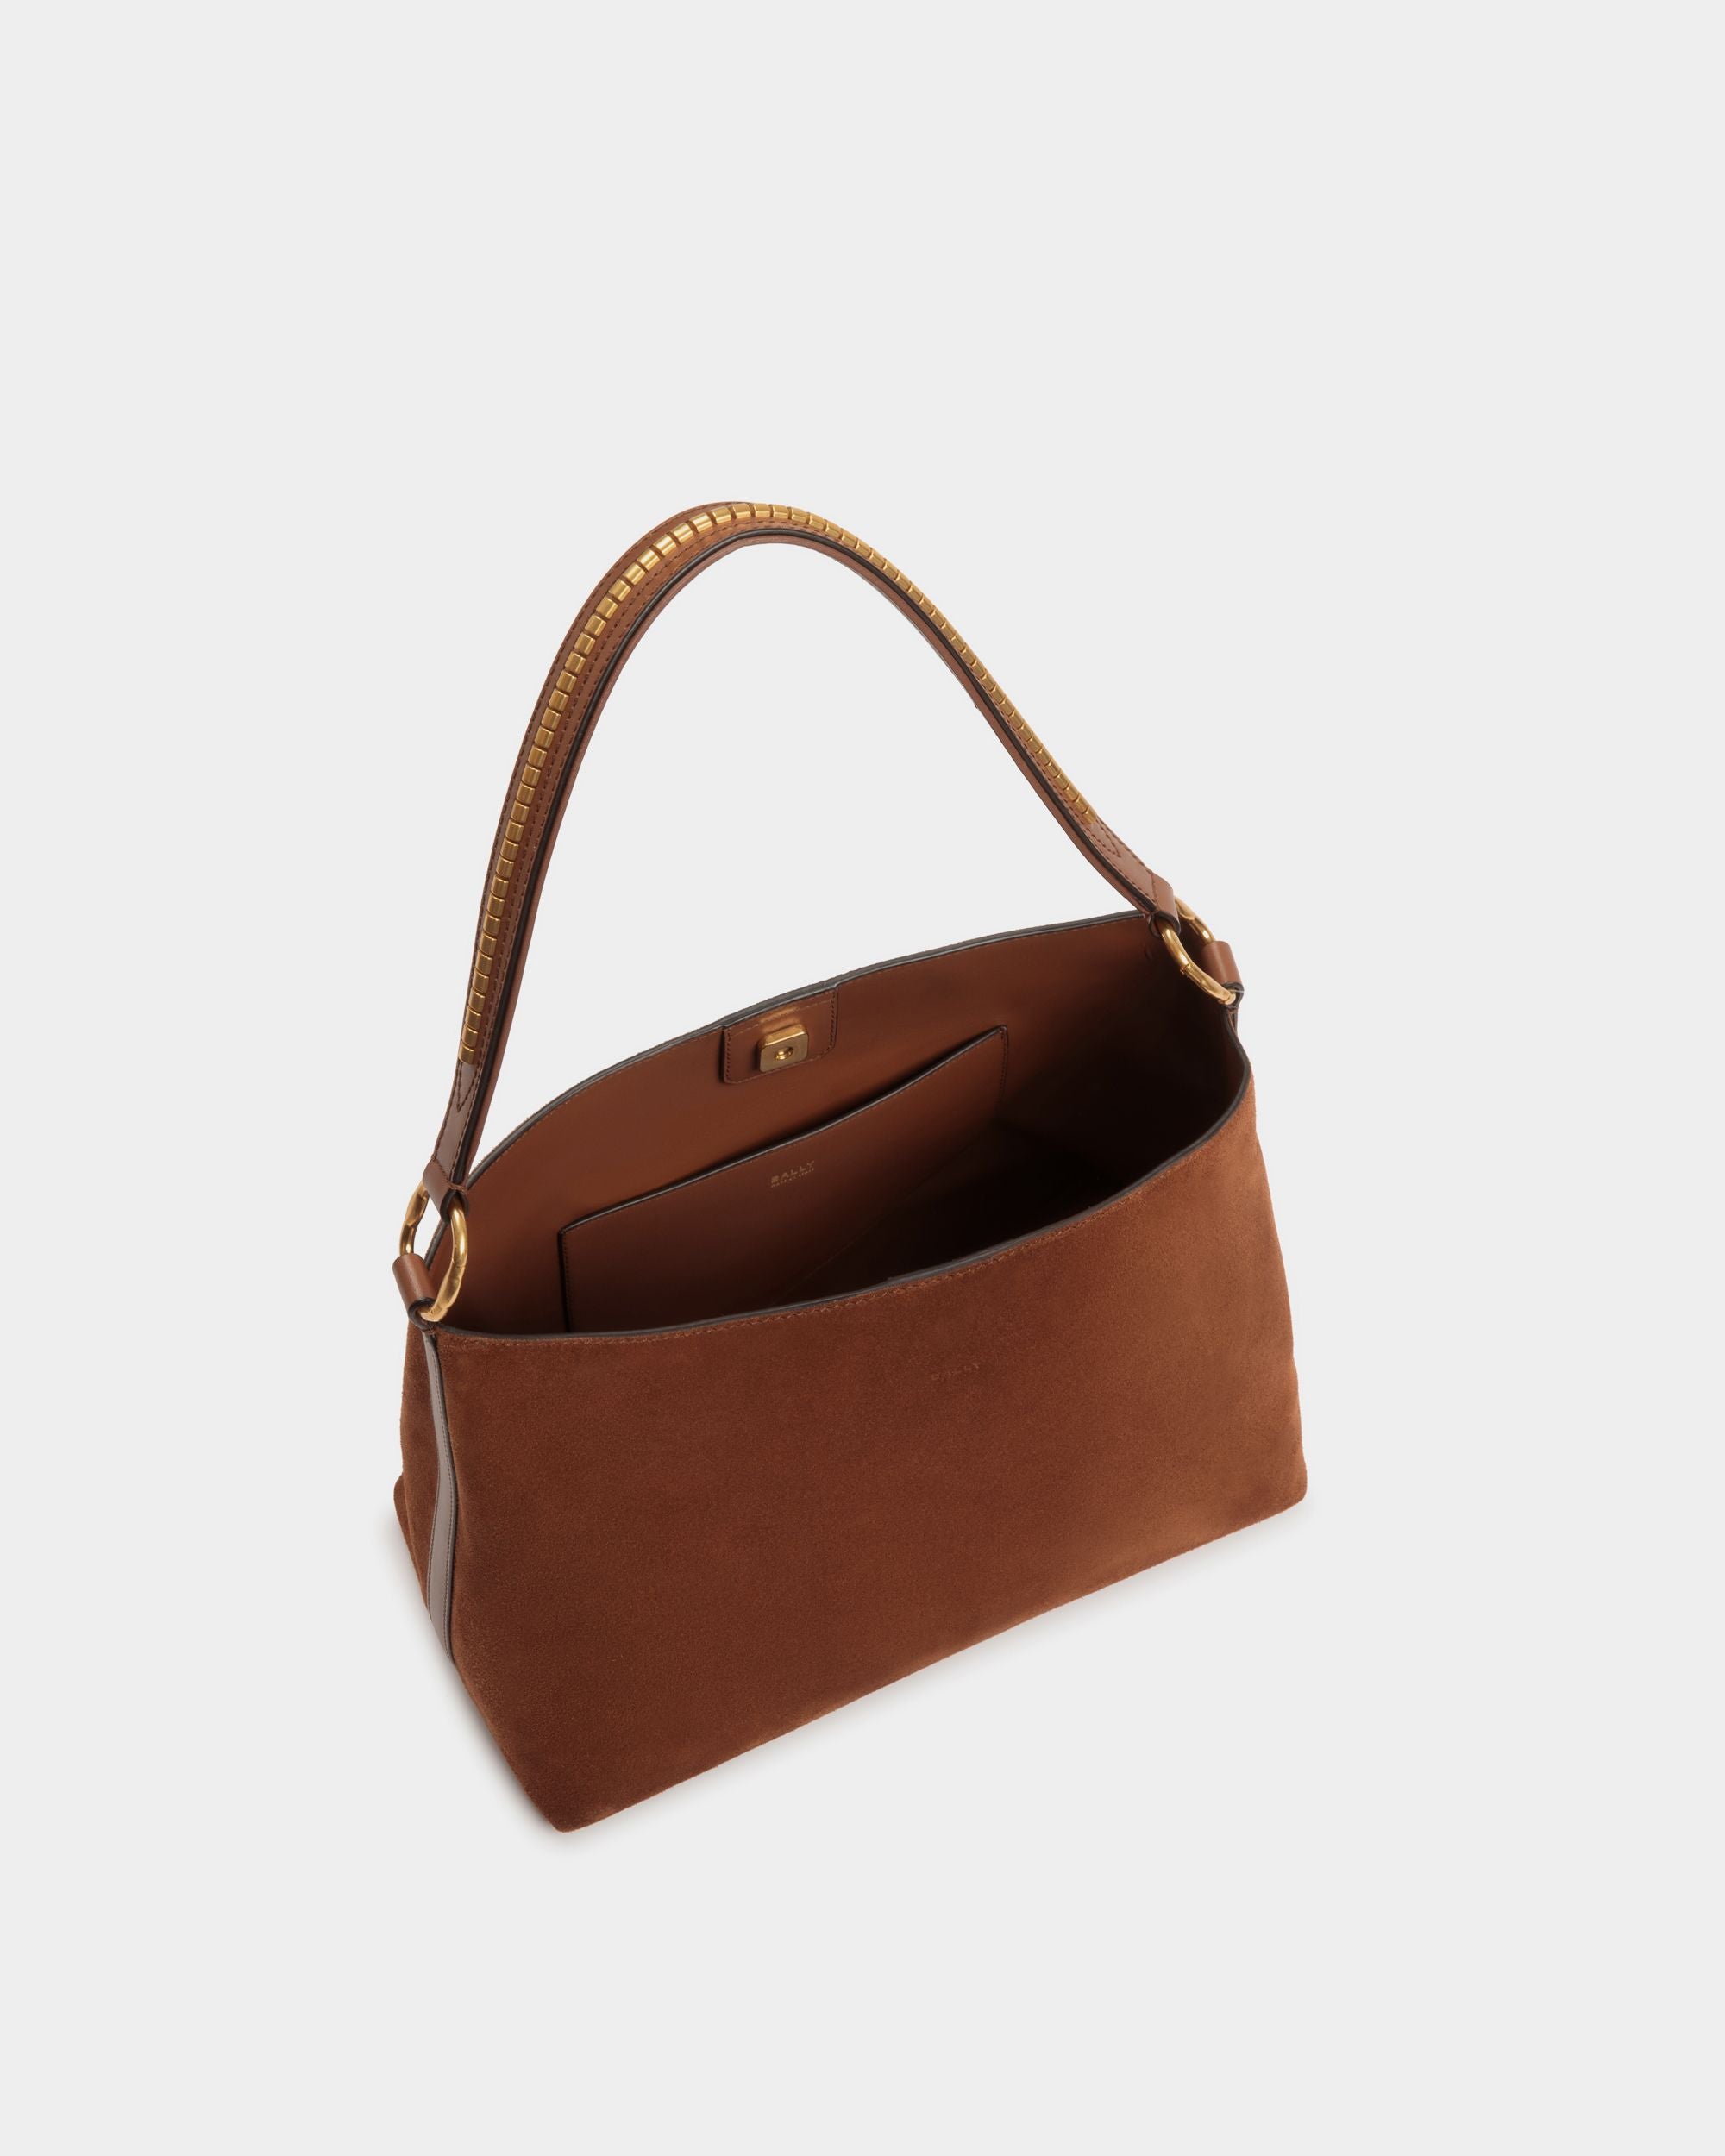 Arkle | Women's Hobo Bag in Brown Suede | Bally | Still Life Open / Inside